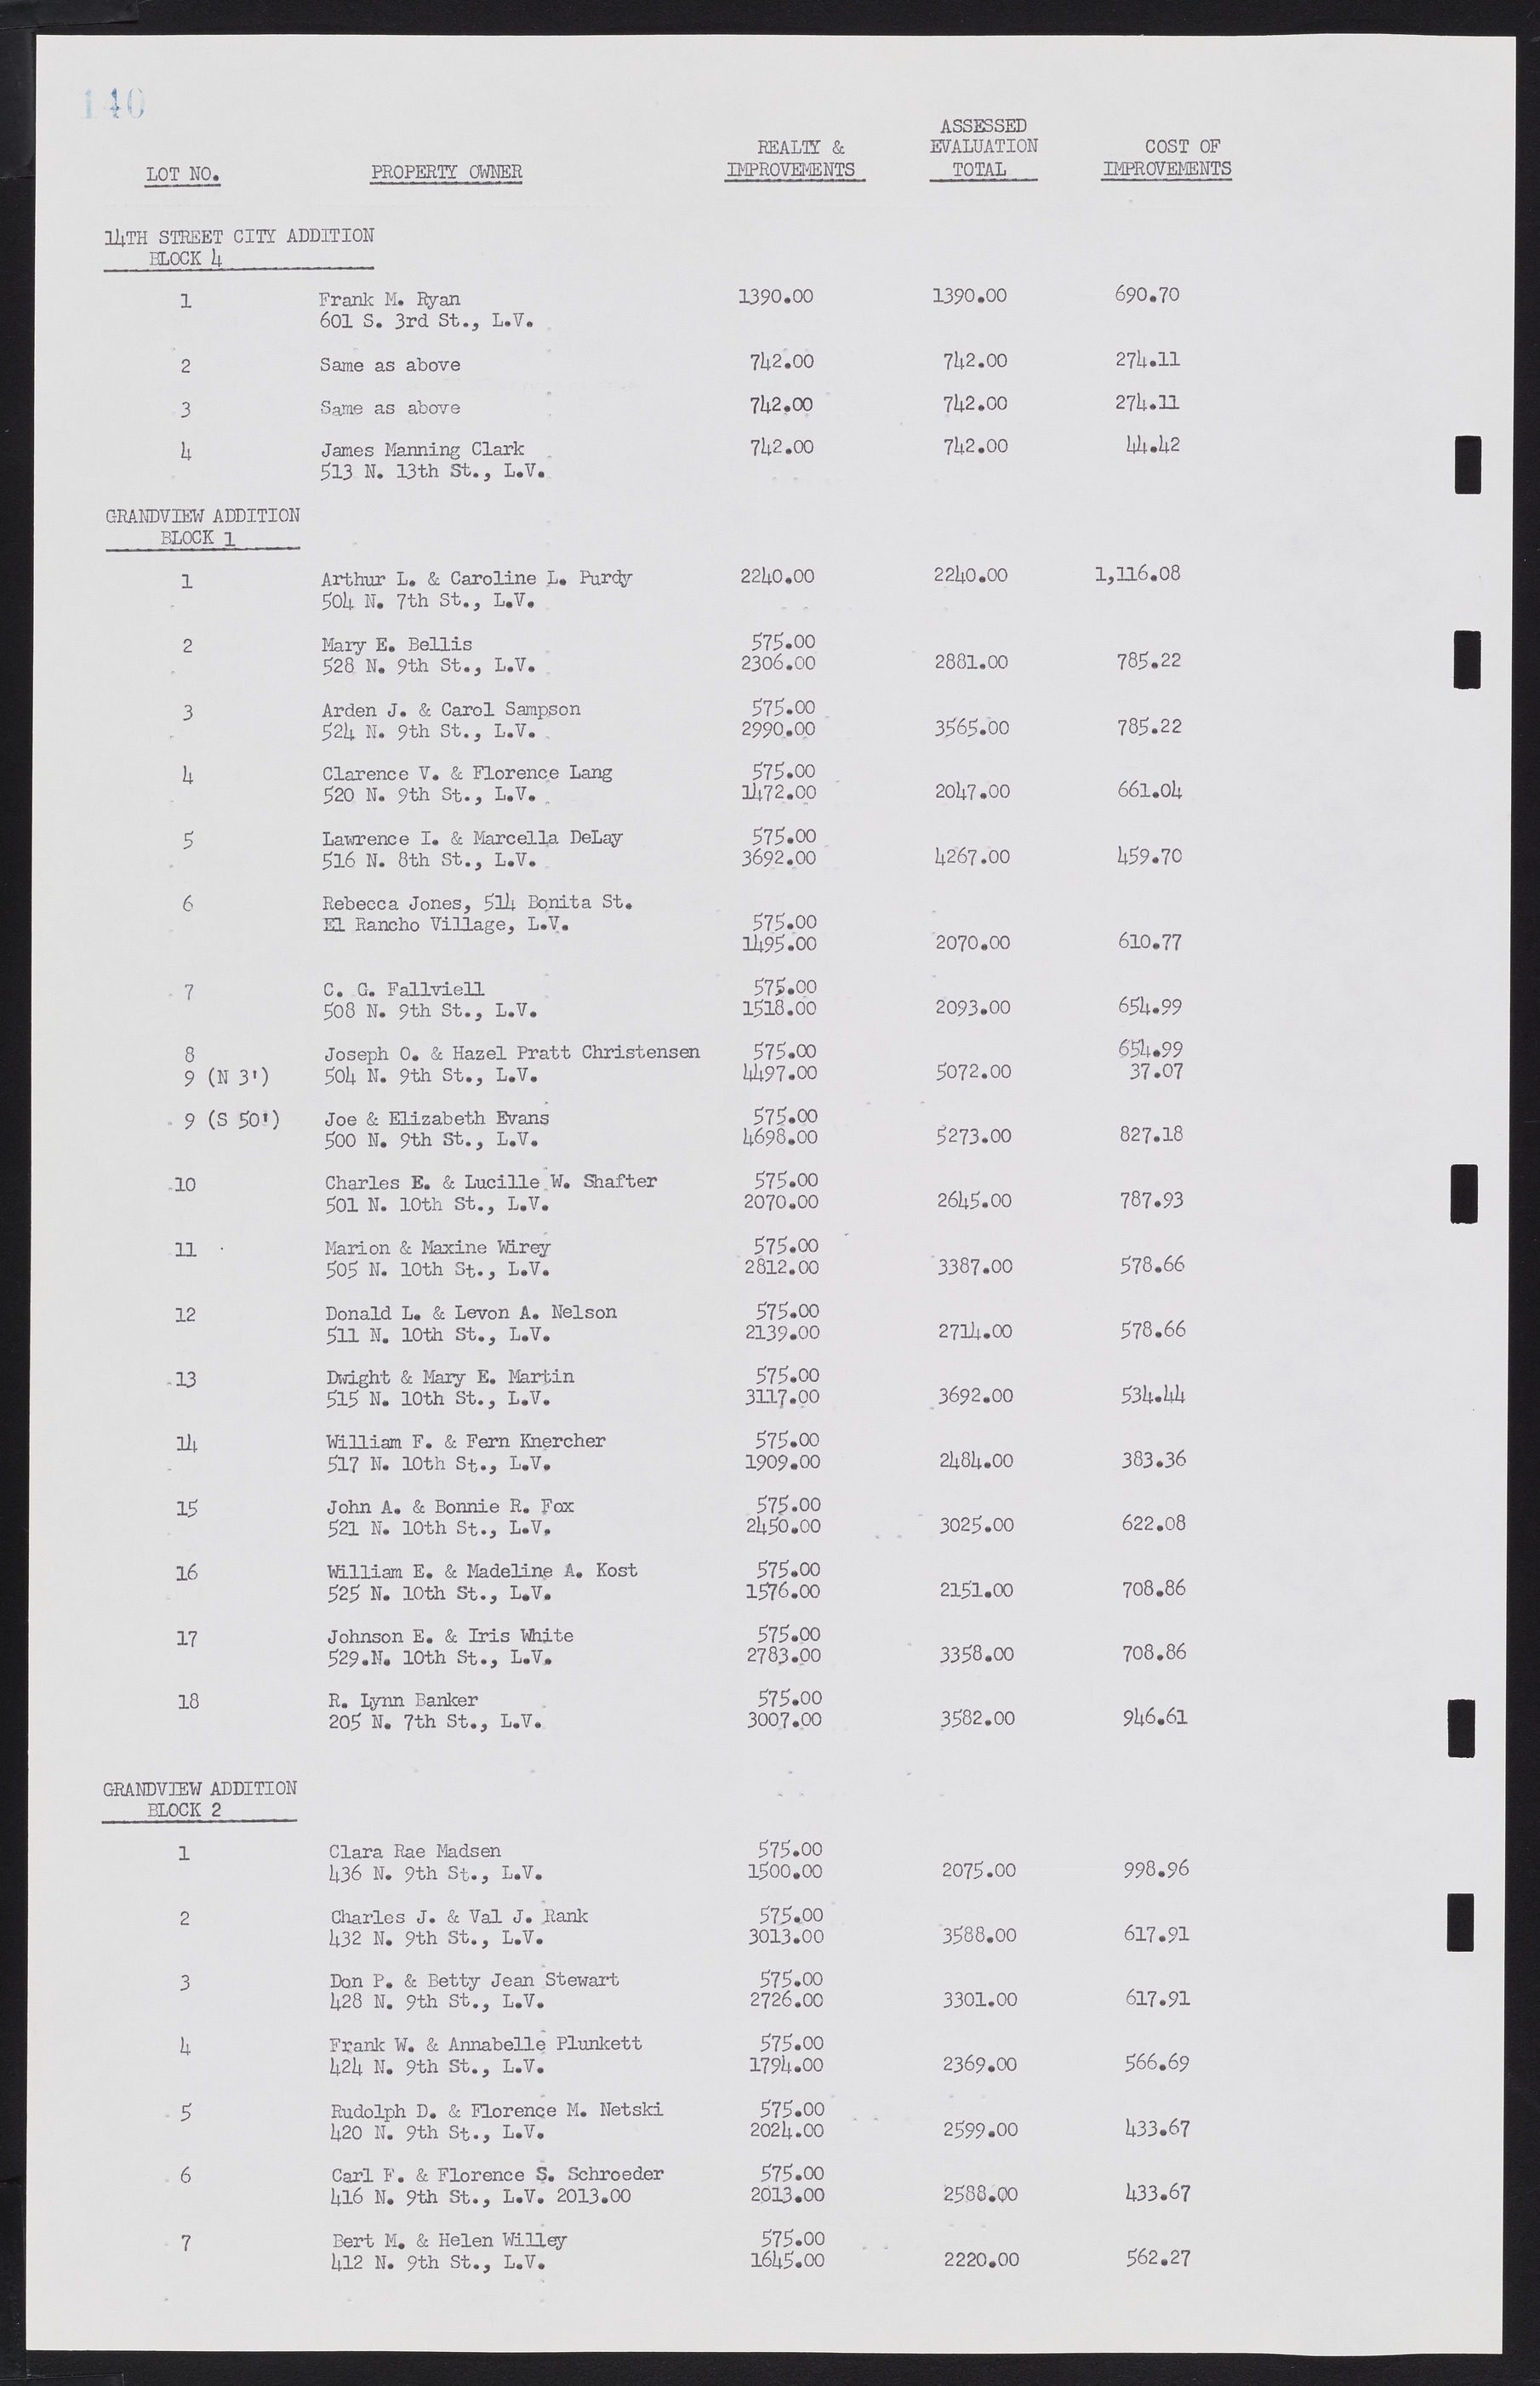 Las Vegas City Commission Minutes, February 17, 1954 to September 21, 1955, lvc000009-144